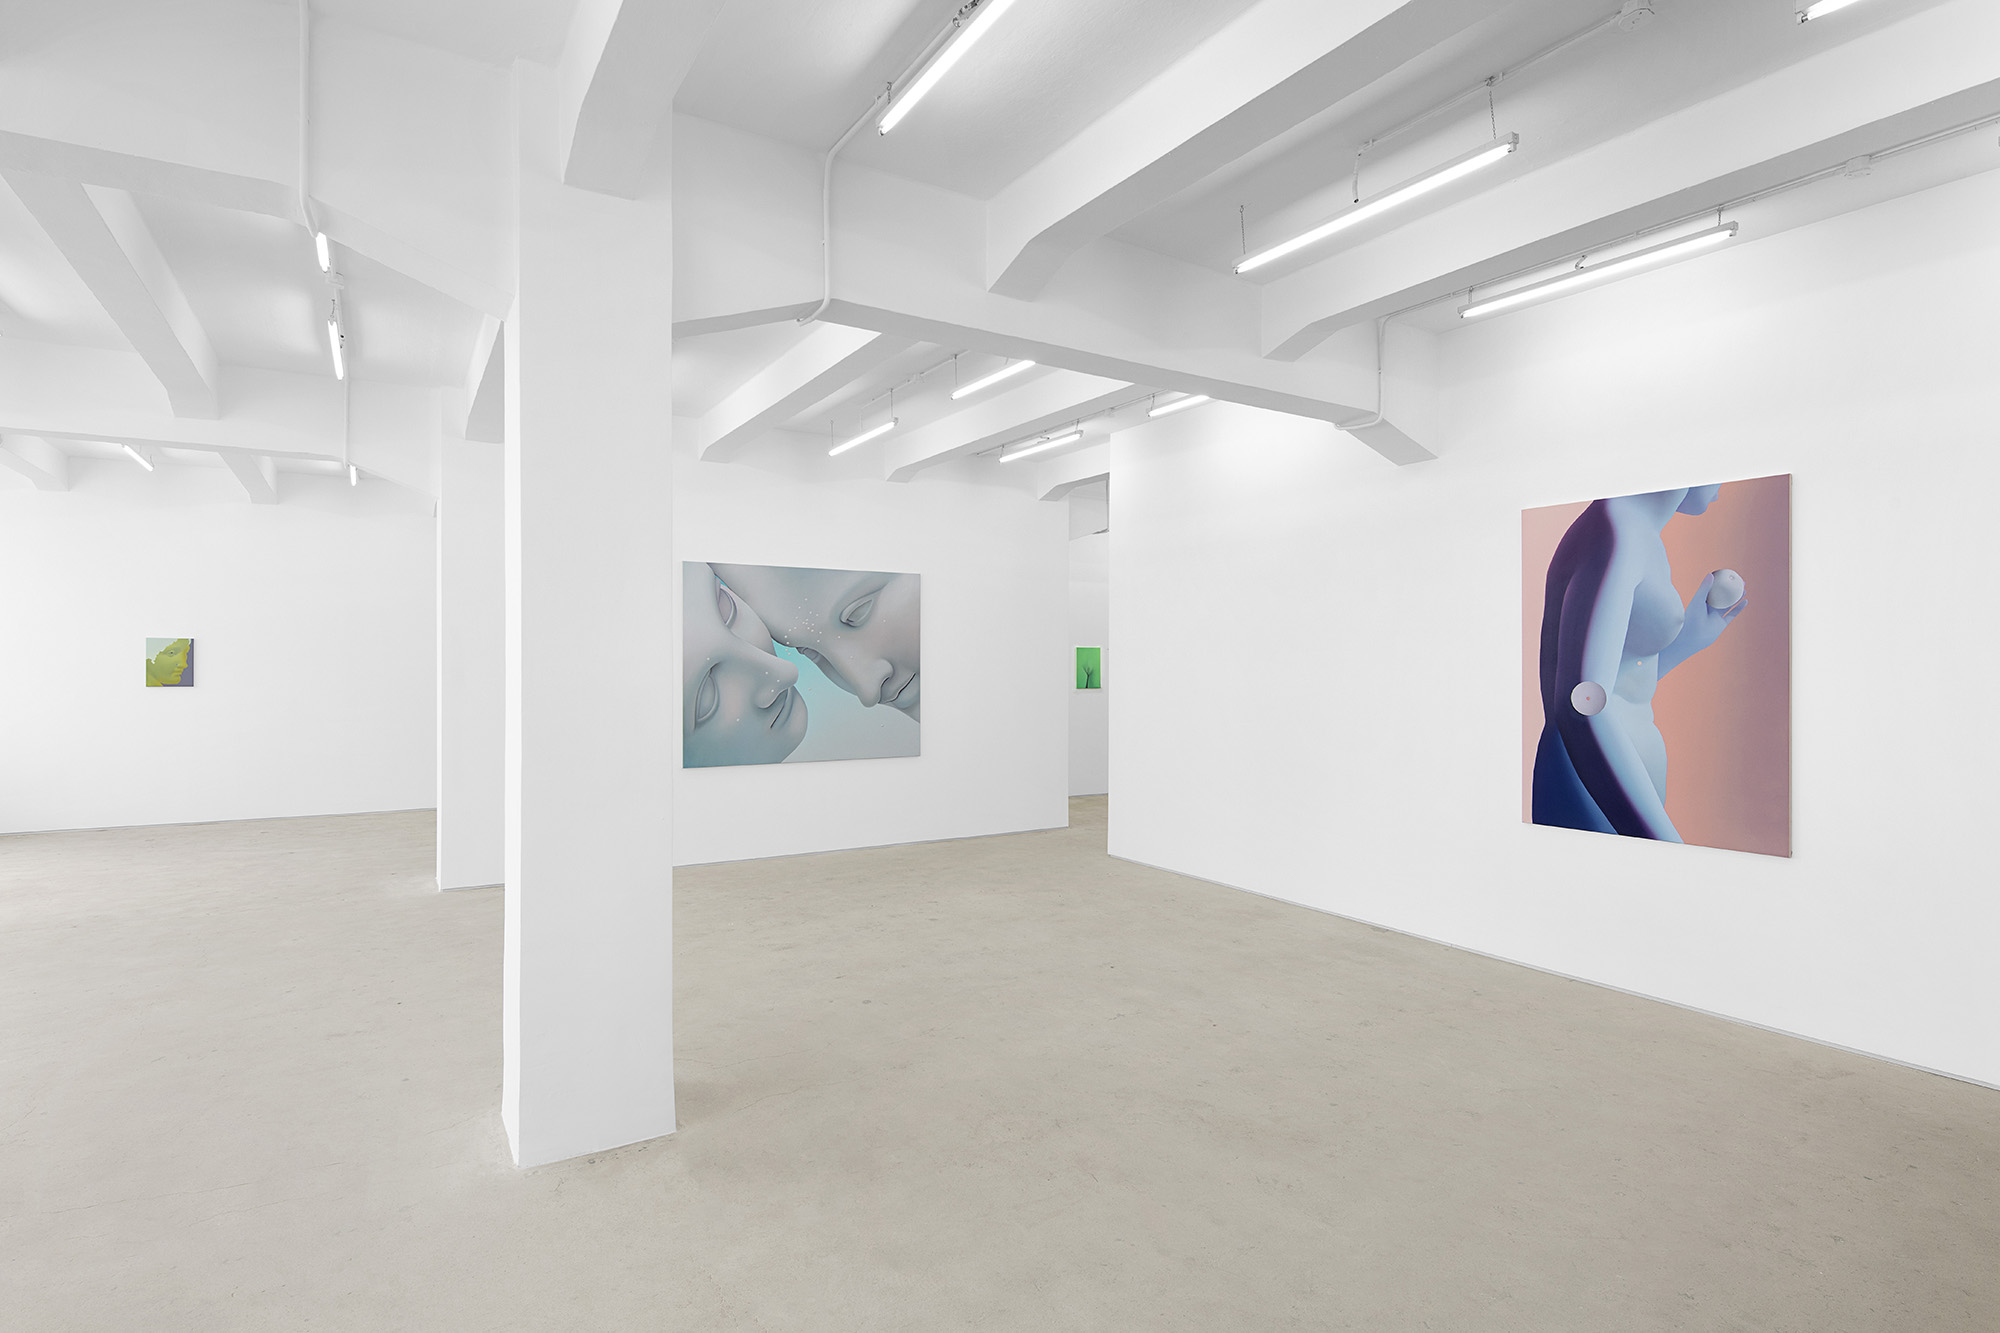 Vivian Greven, The Negatives, solo exhibition at Gallery Vacancy, installation view 13